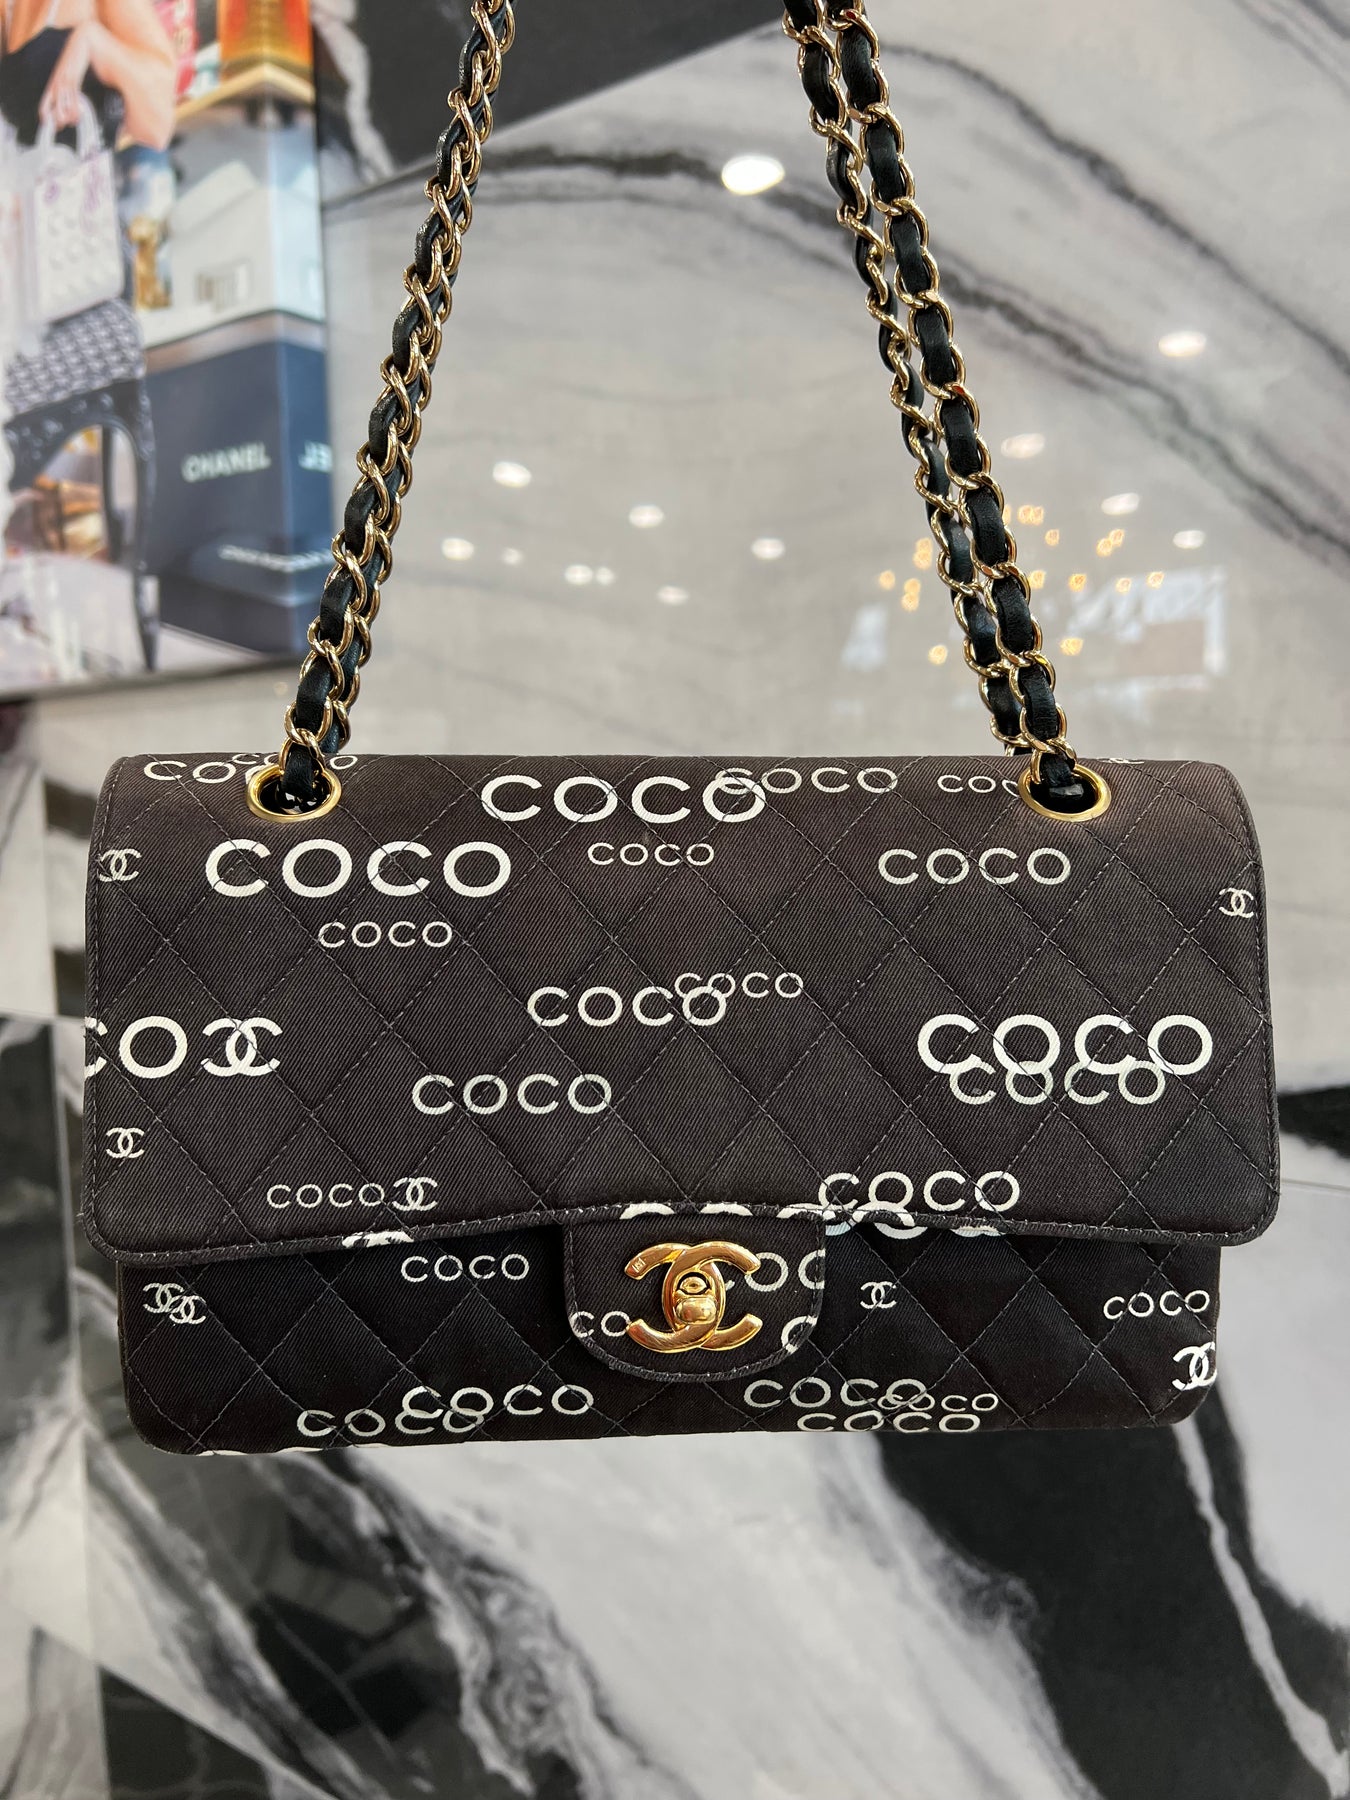 coco chanel classic bag